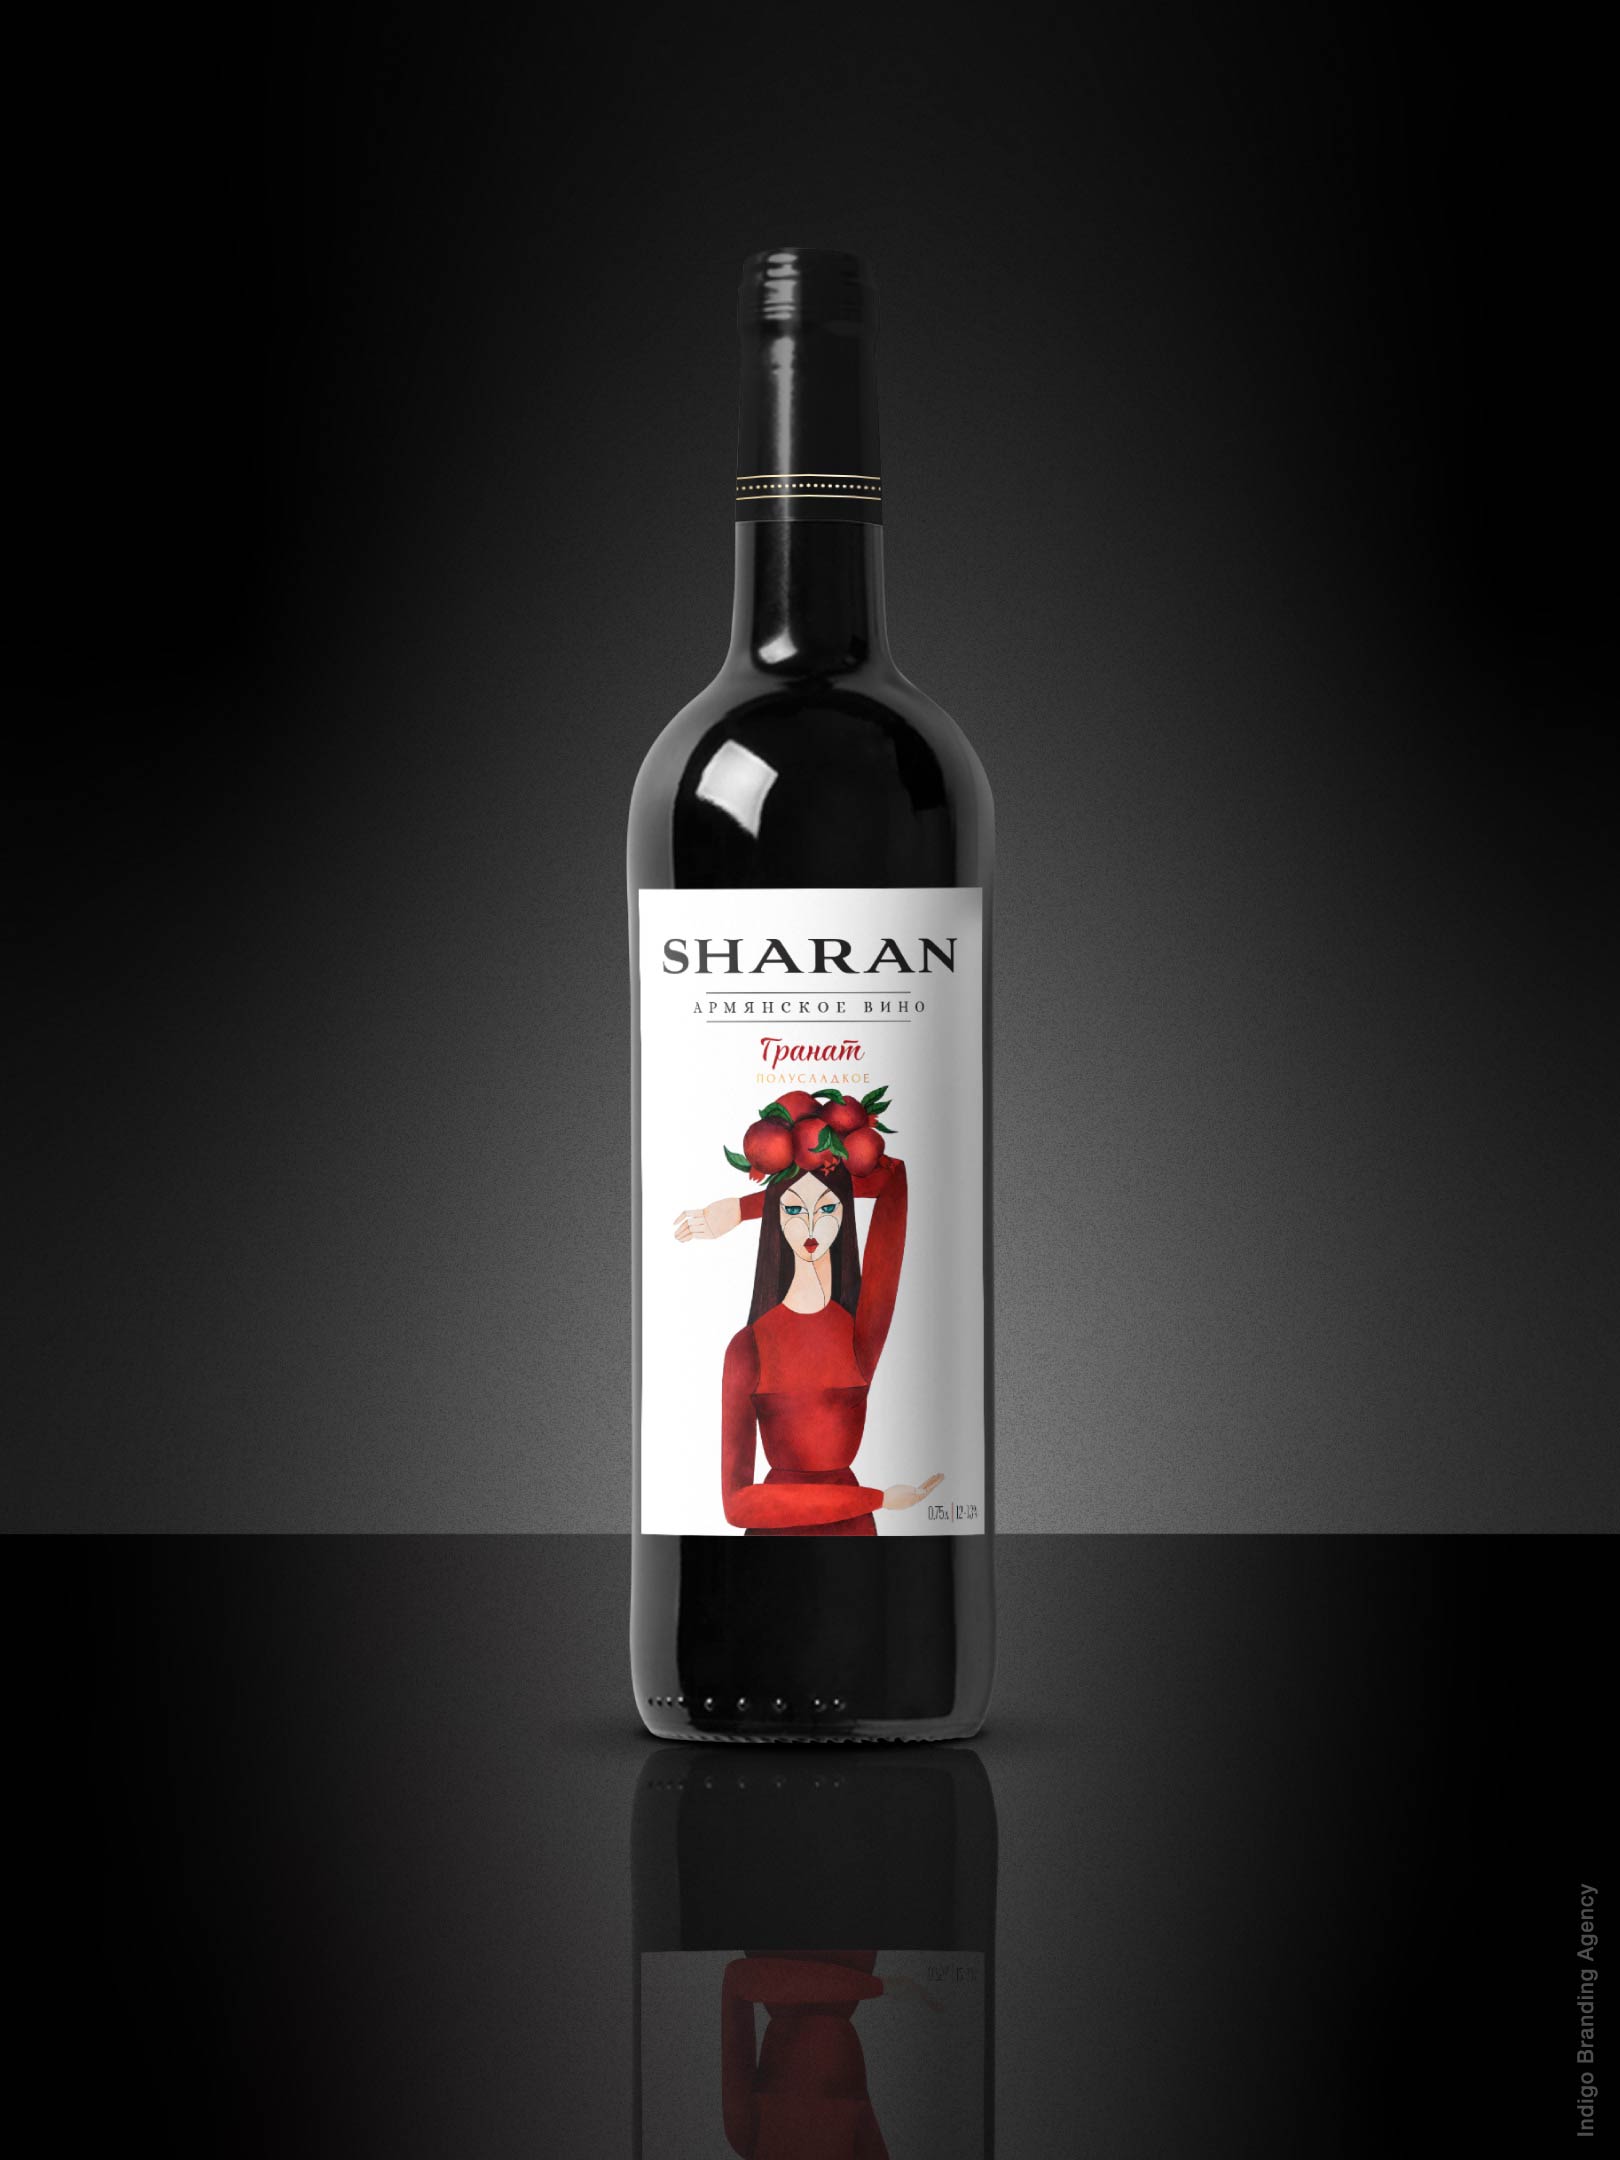 Sharan Fruit Wines branding and labeling by Indigo branding